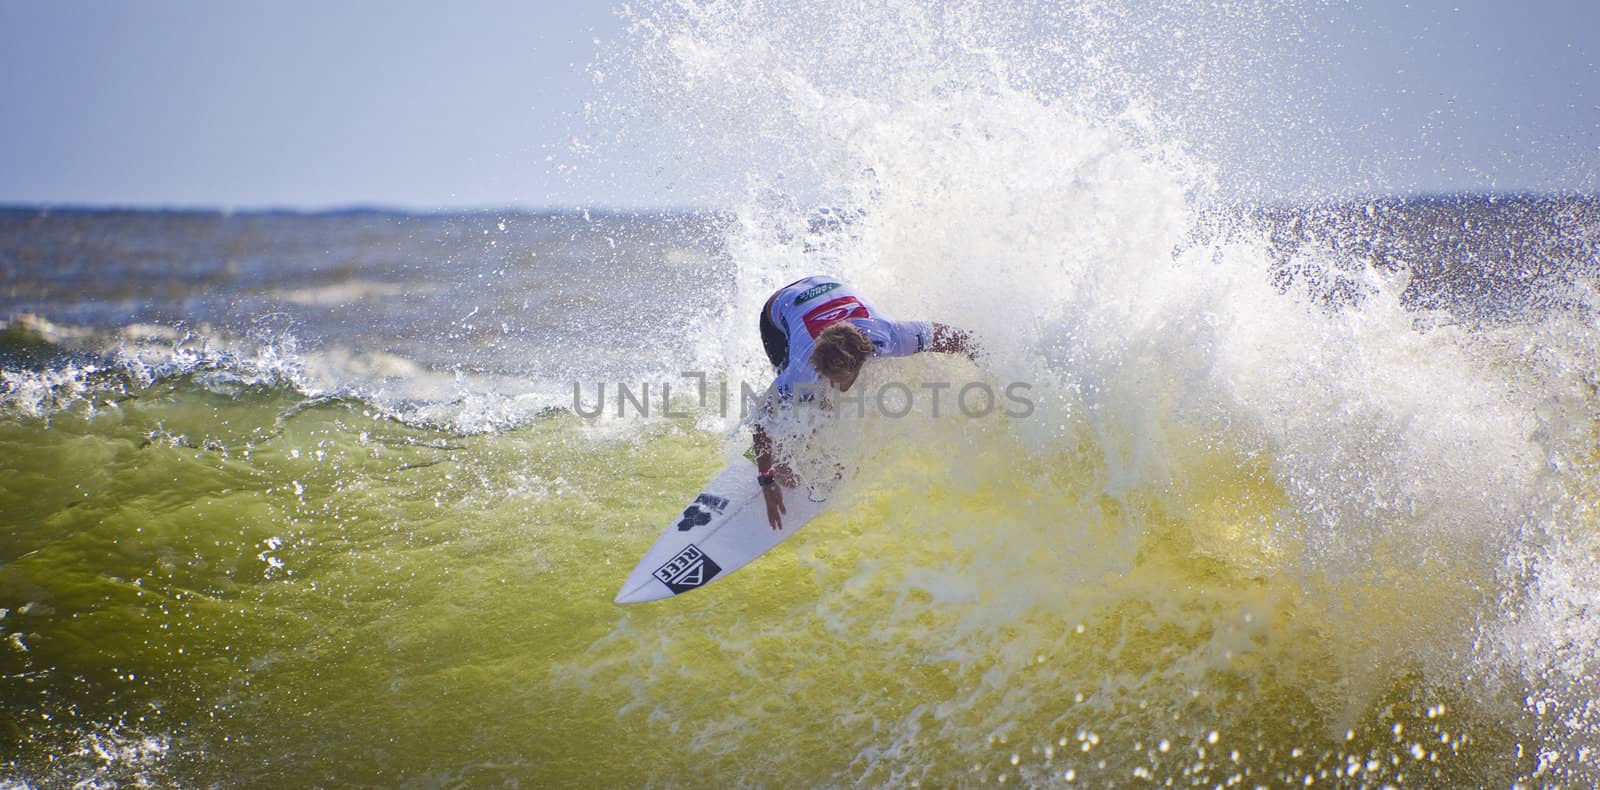 Surfing by Imagecom